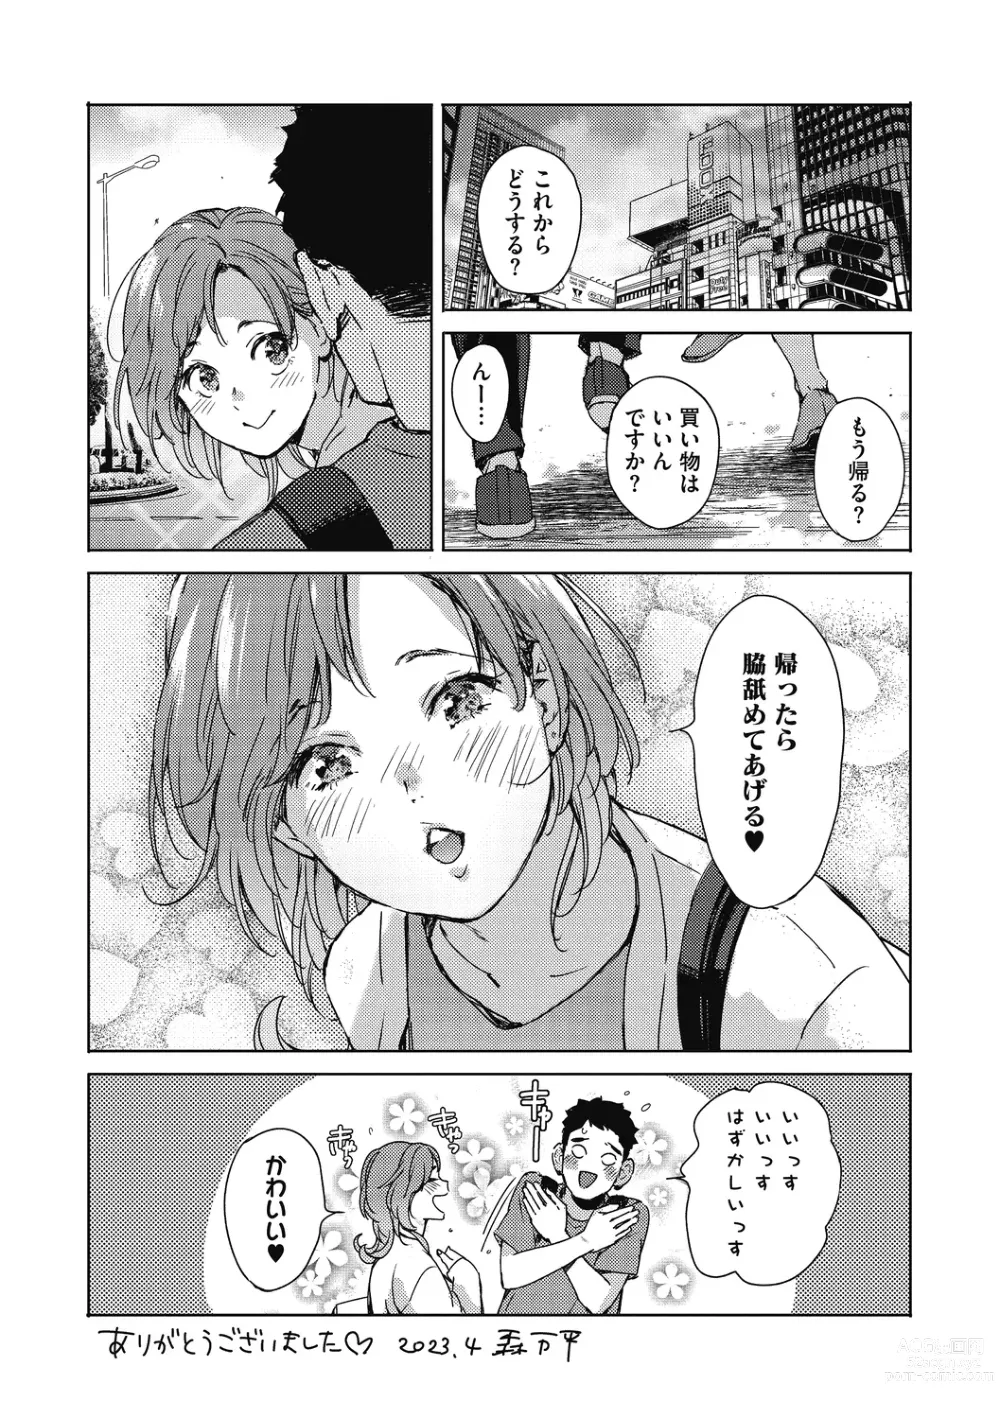 Page 211 of manga Barairo ni Somare - Feel so PINK!